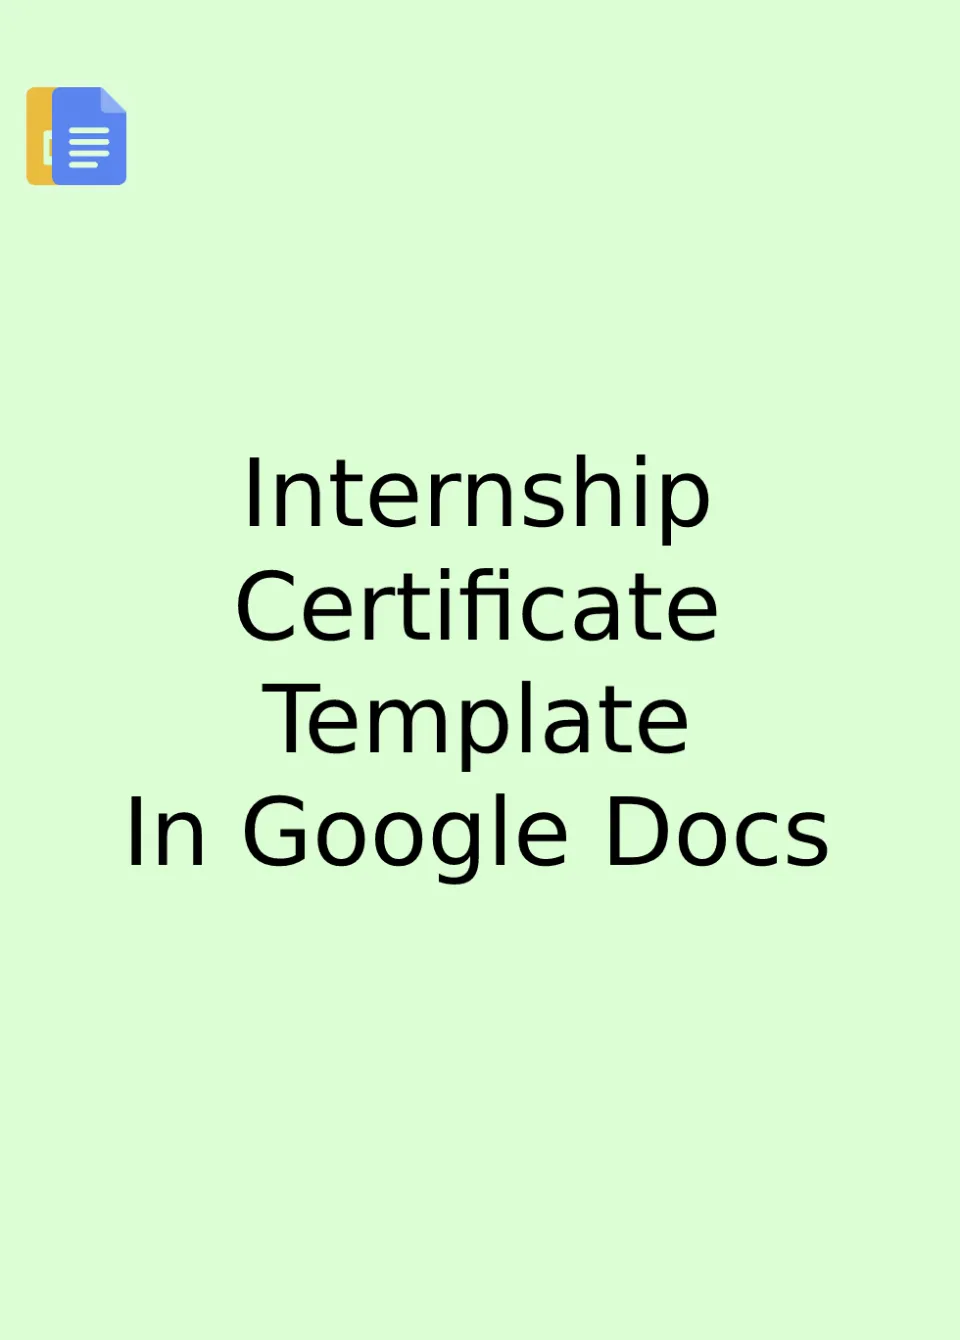 Internship Certificate Template Google Docs